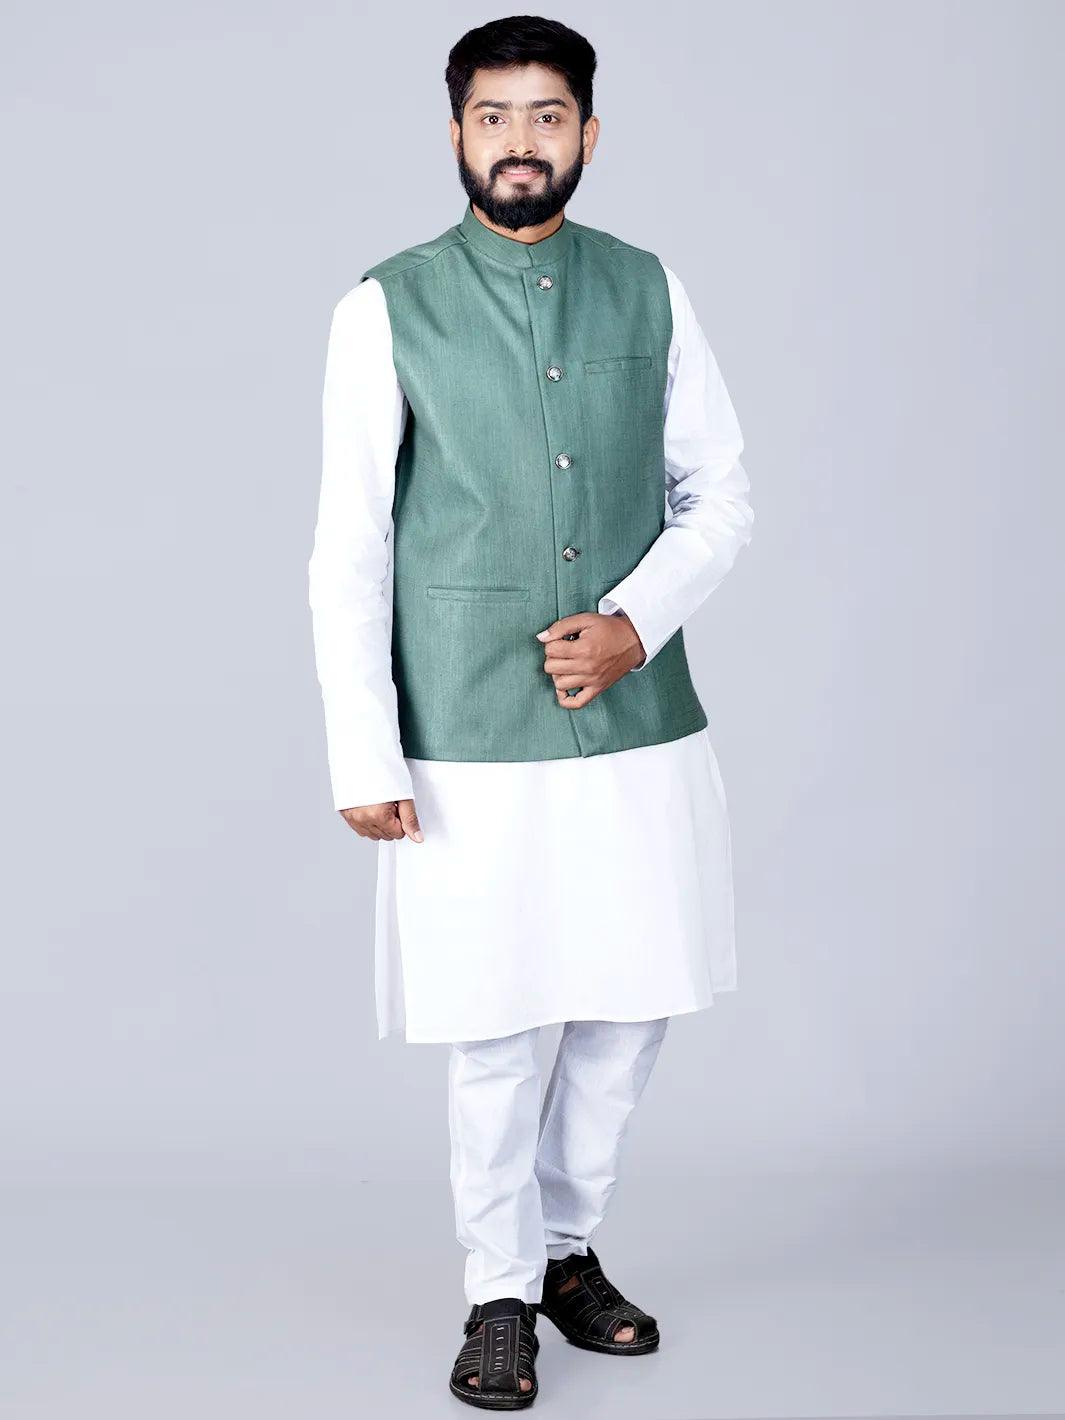 Artichoke Green Handwoven Cotton Modi Jacket - WeaversIndia